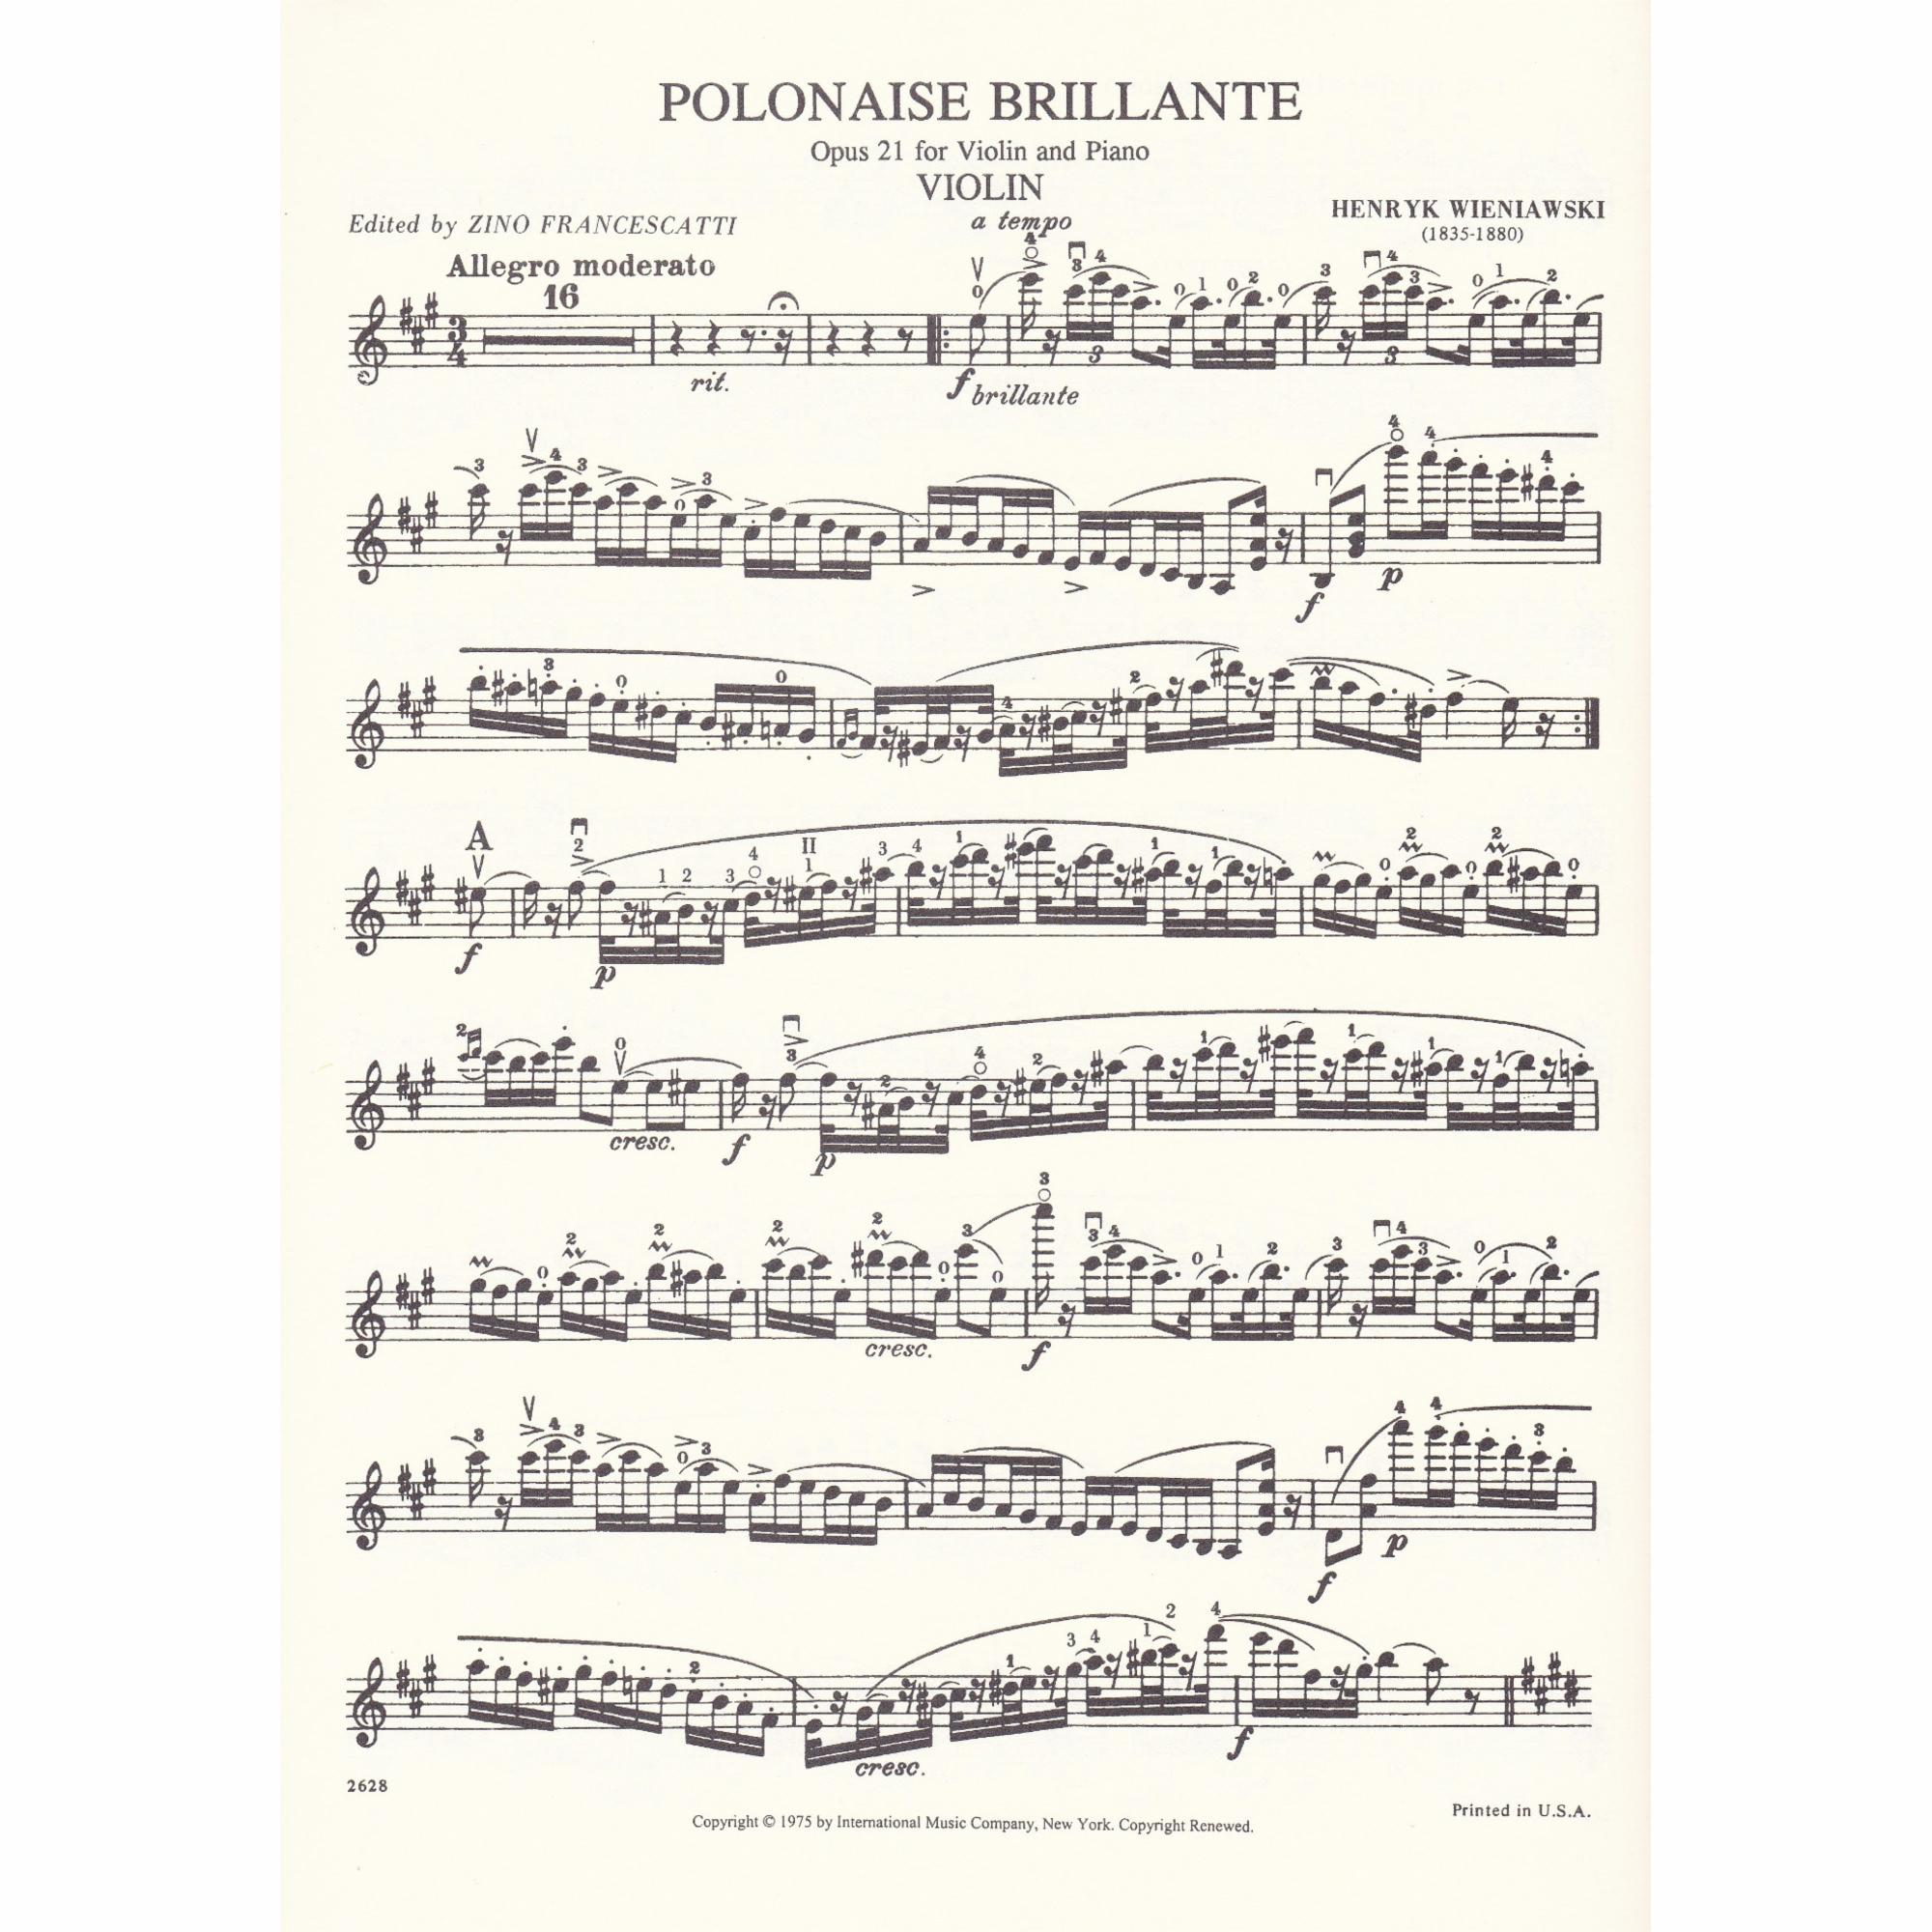 Polonaise Brillante No. 2 in A Major, Op. 21